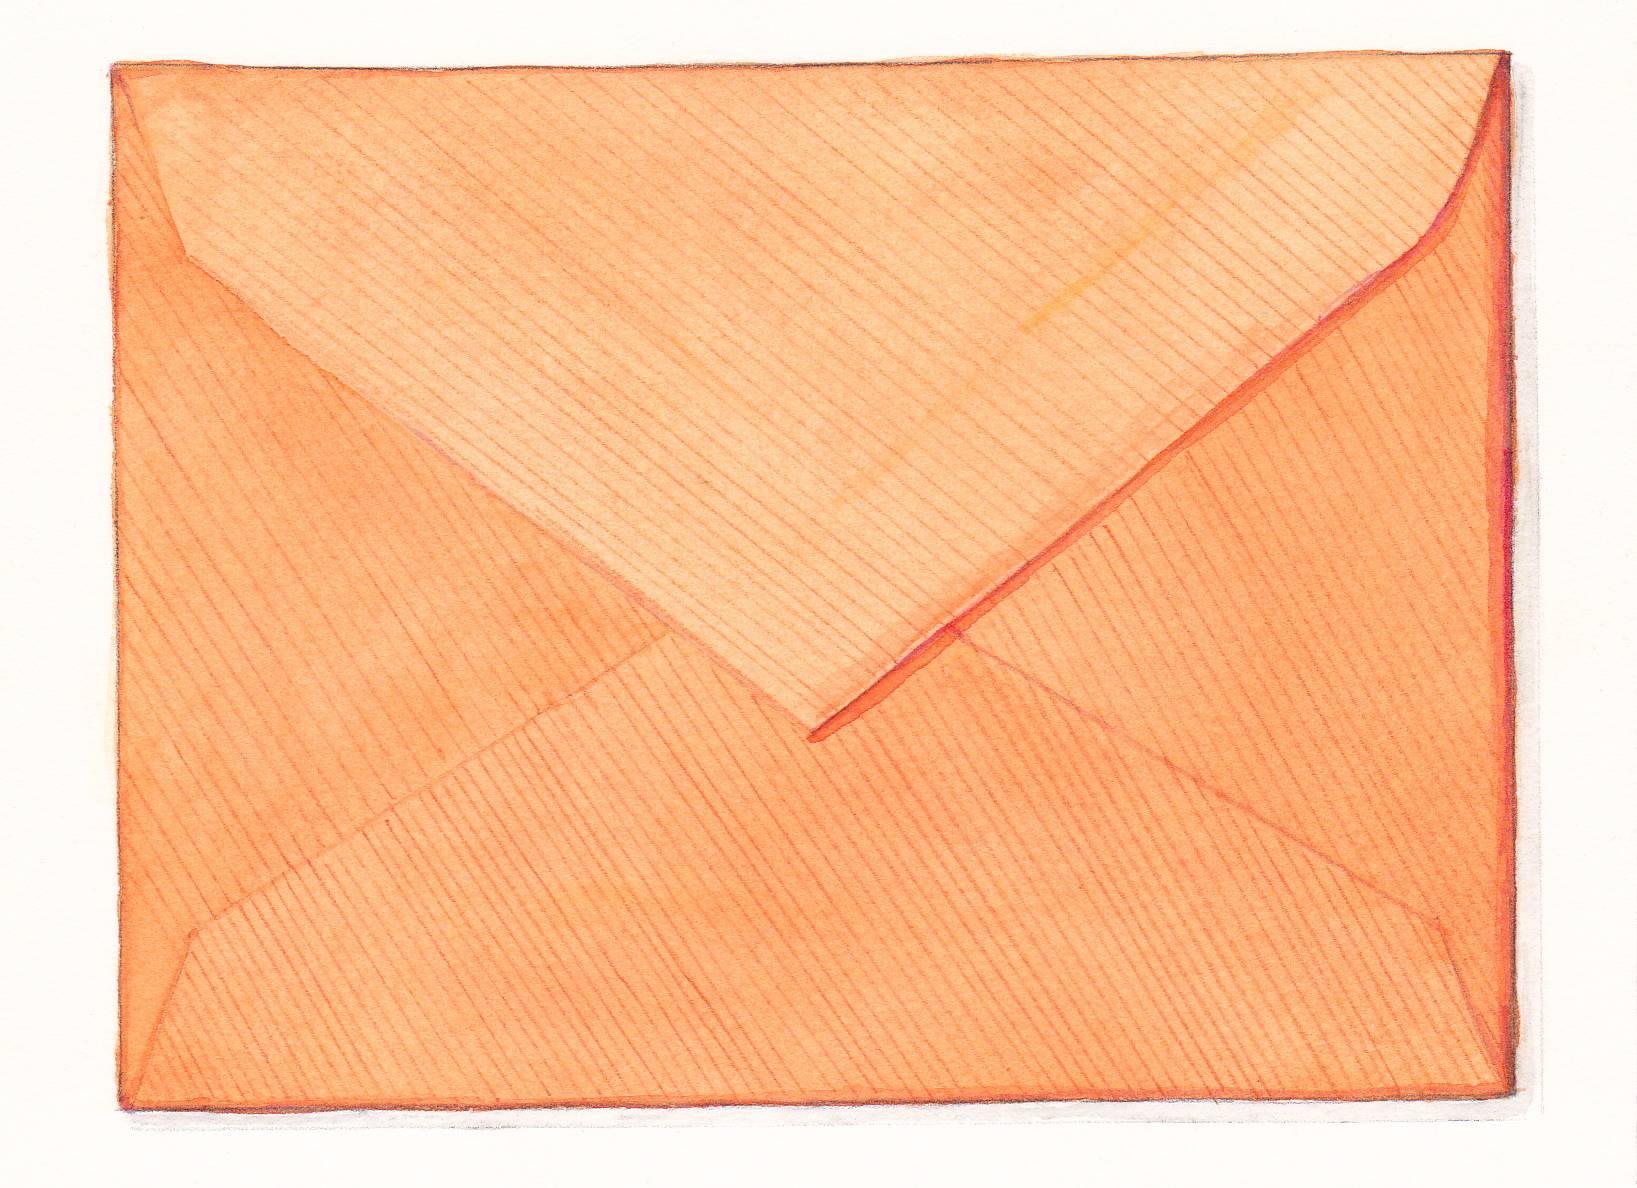 Margot Glass Still-Life - Orange Envelope, Watercolor and pencil realist still life, 2016